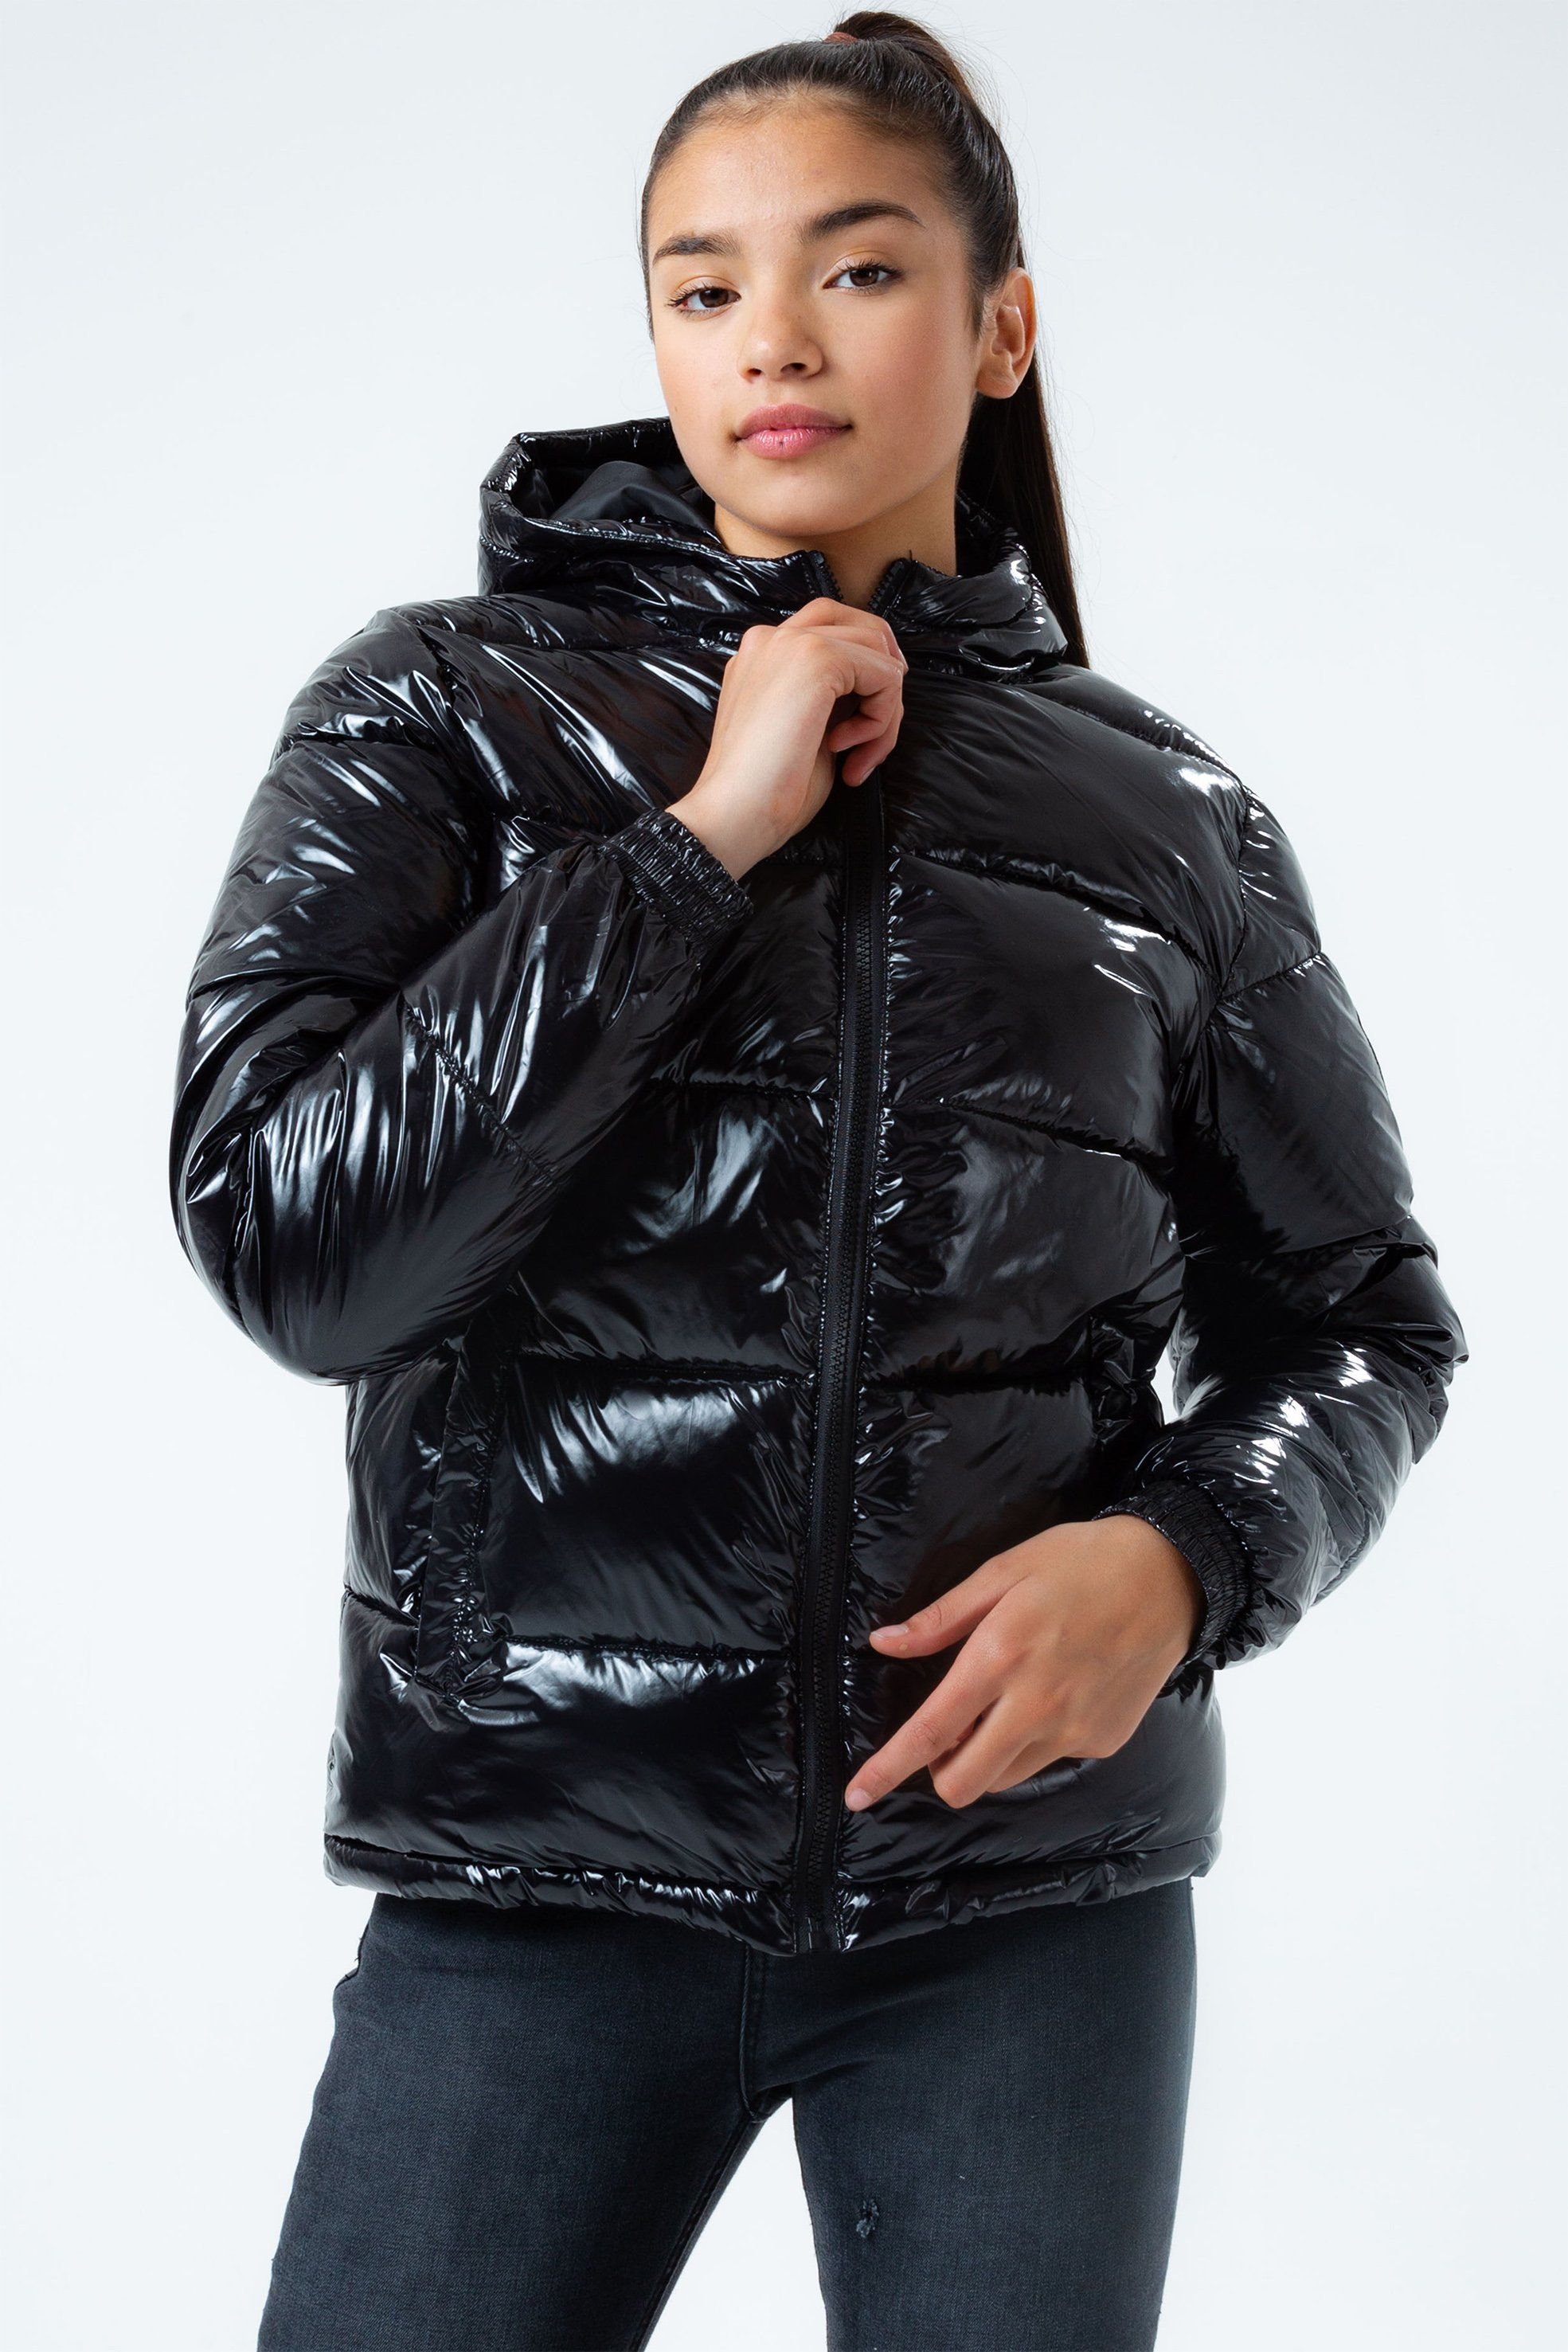 Hype Hype Padded Jacket Boys Puffer Lightweight Coat Top Full Length Sleeve Zip 